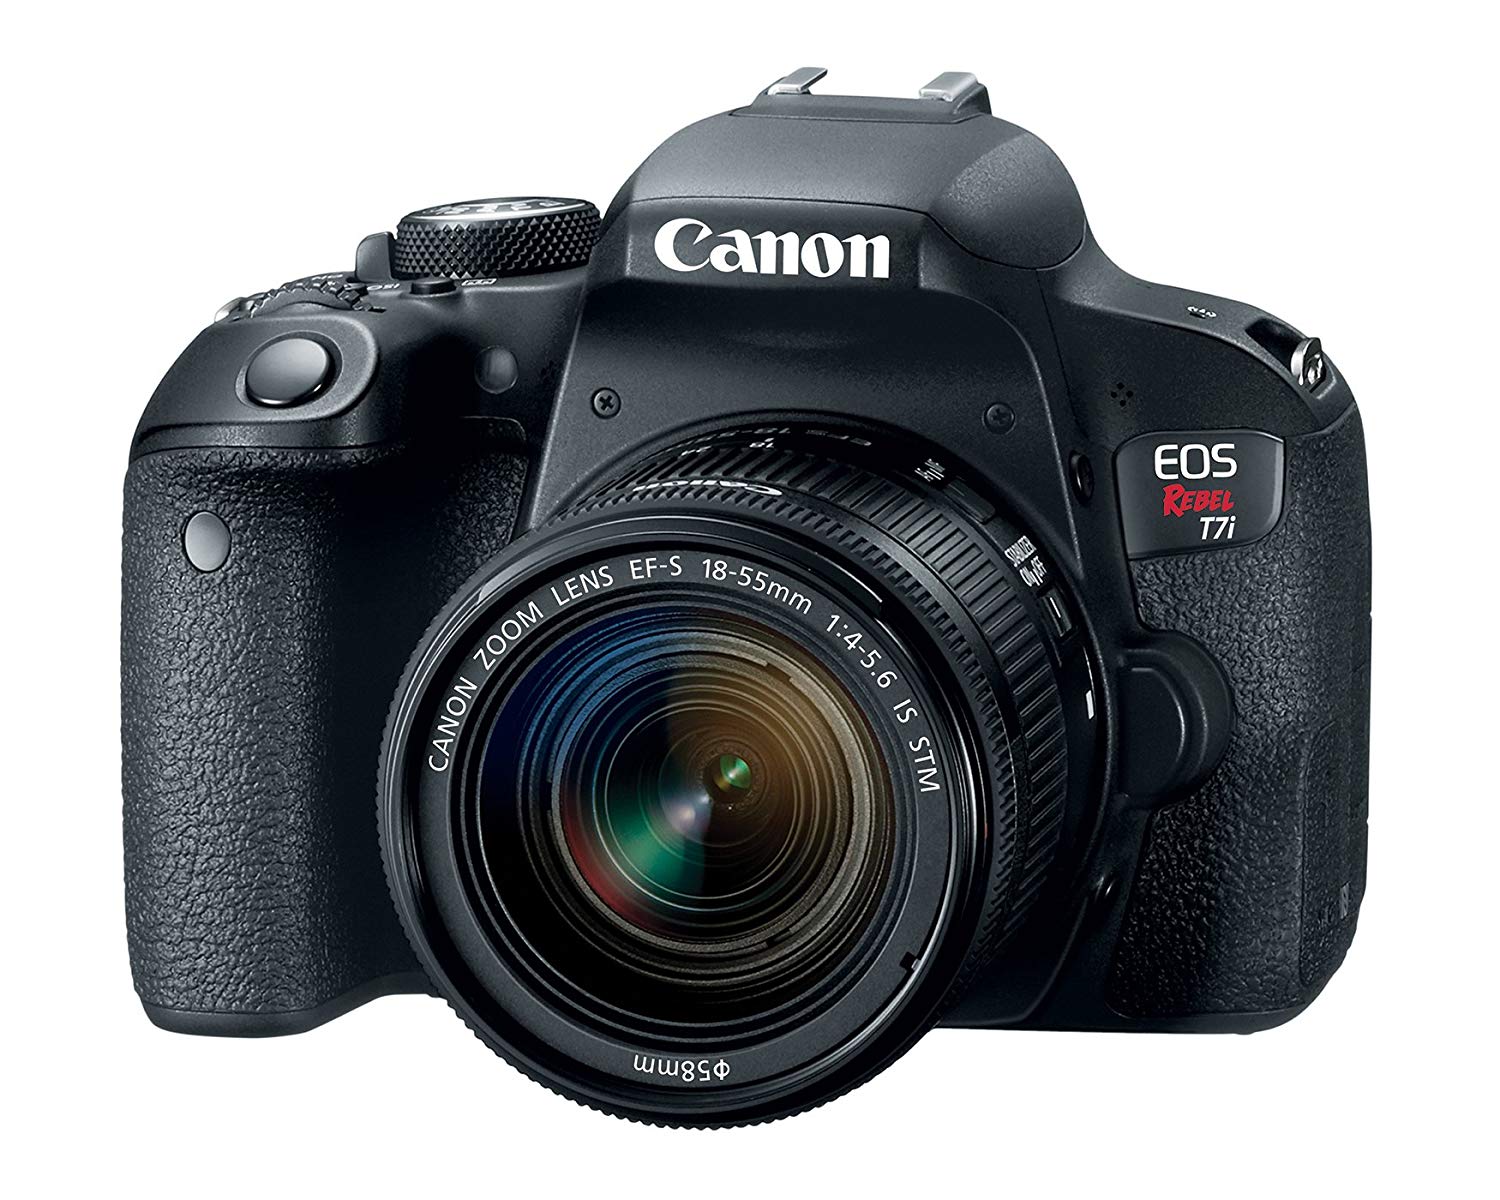 Canon EOS REBEL T7i Built-In Wi-Fi DSLR Camera